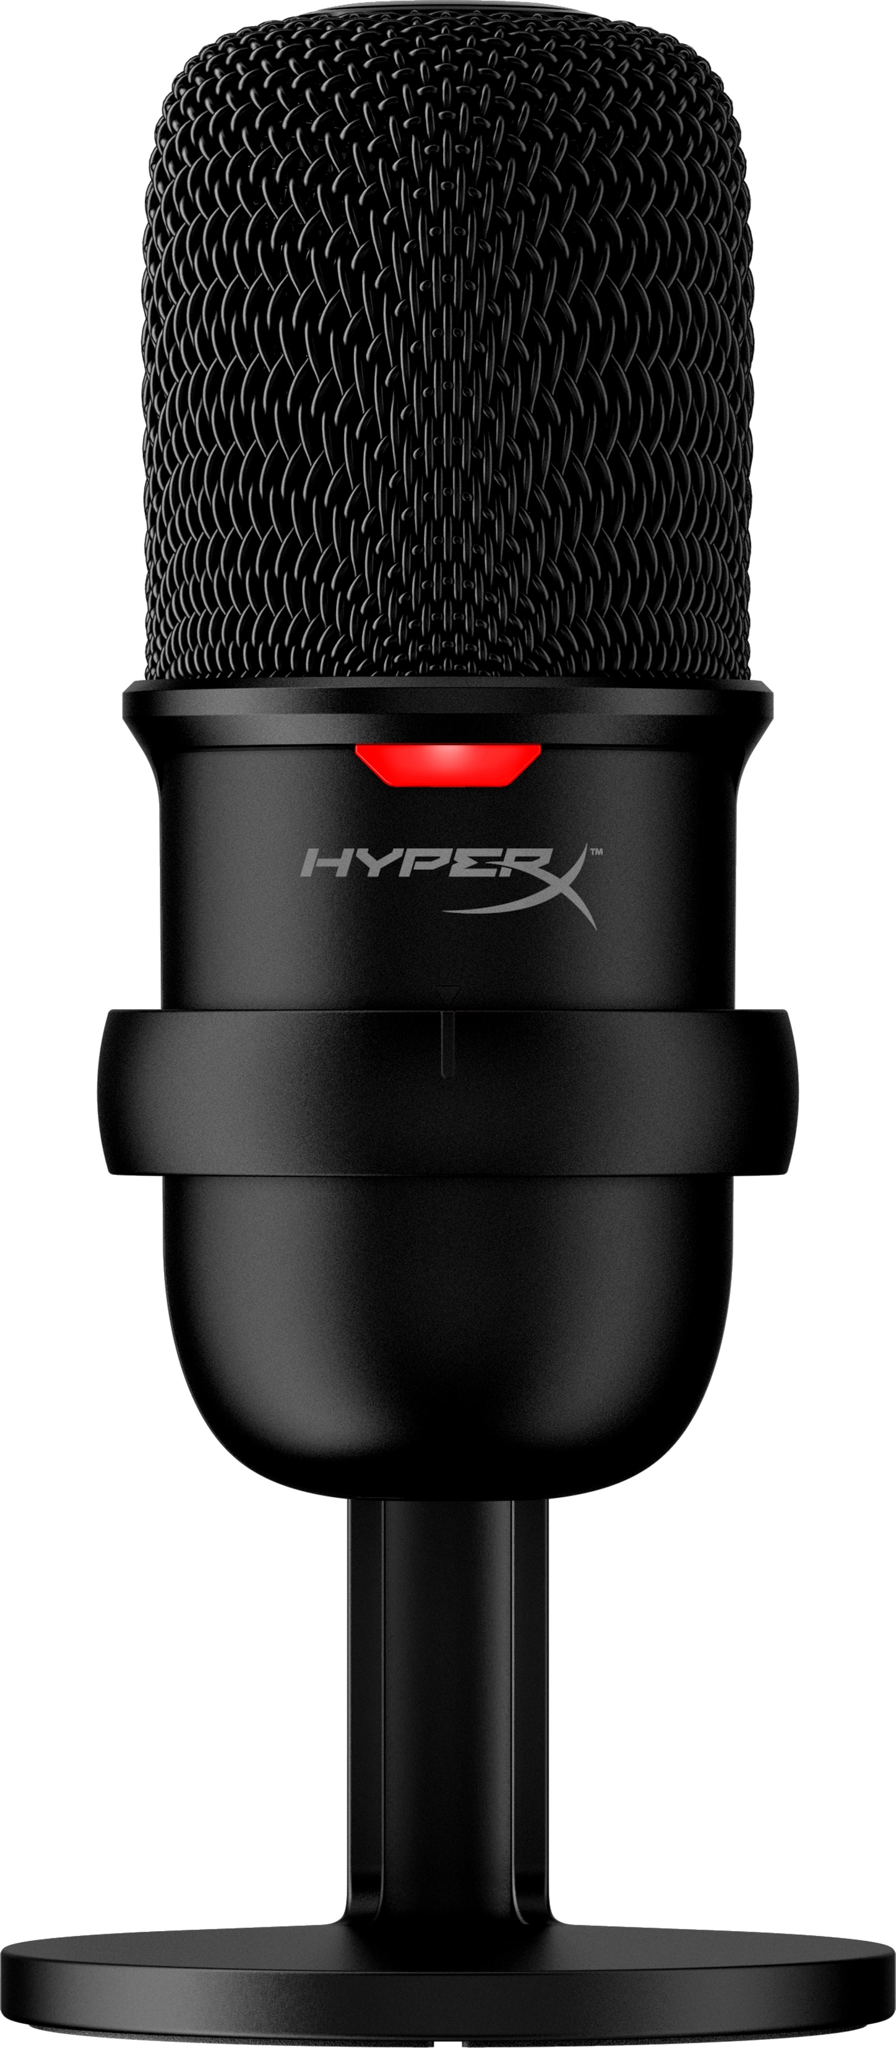 Bild von HP SoloCast Streaming-Mikrofon USB - schwarz - Mikrofon - 48 KHz